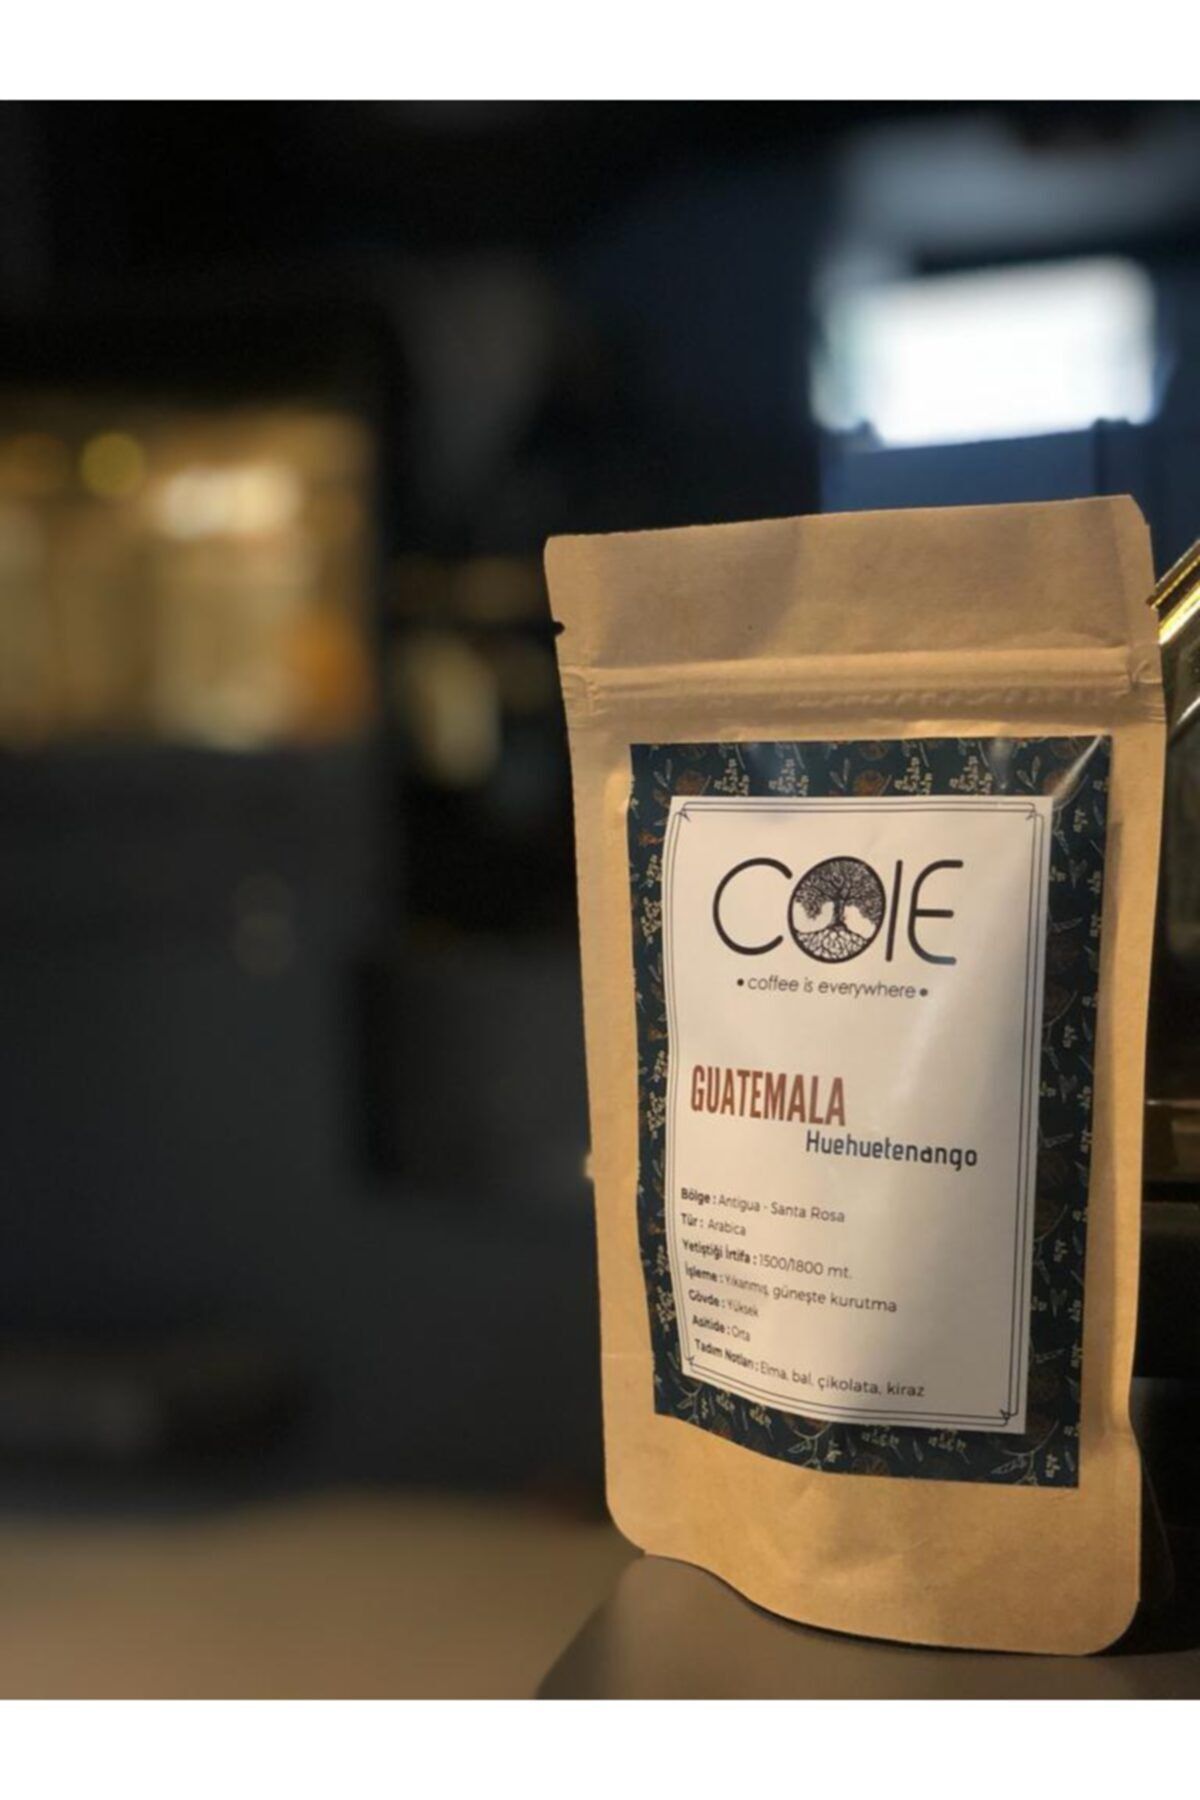 Coie Guatemala Huehuetenango - Filtre Kahve - Öğütülmüş 250 gr